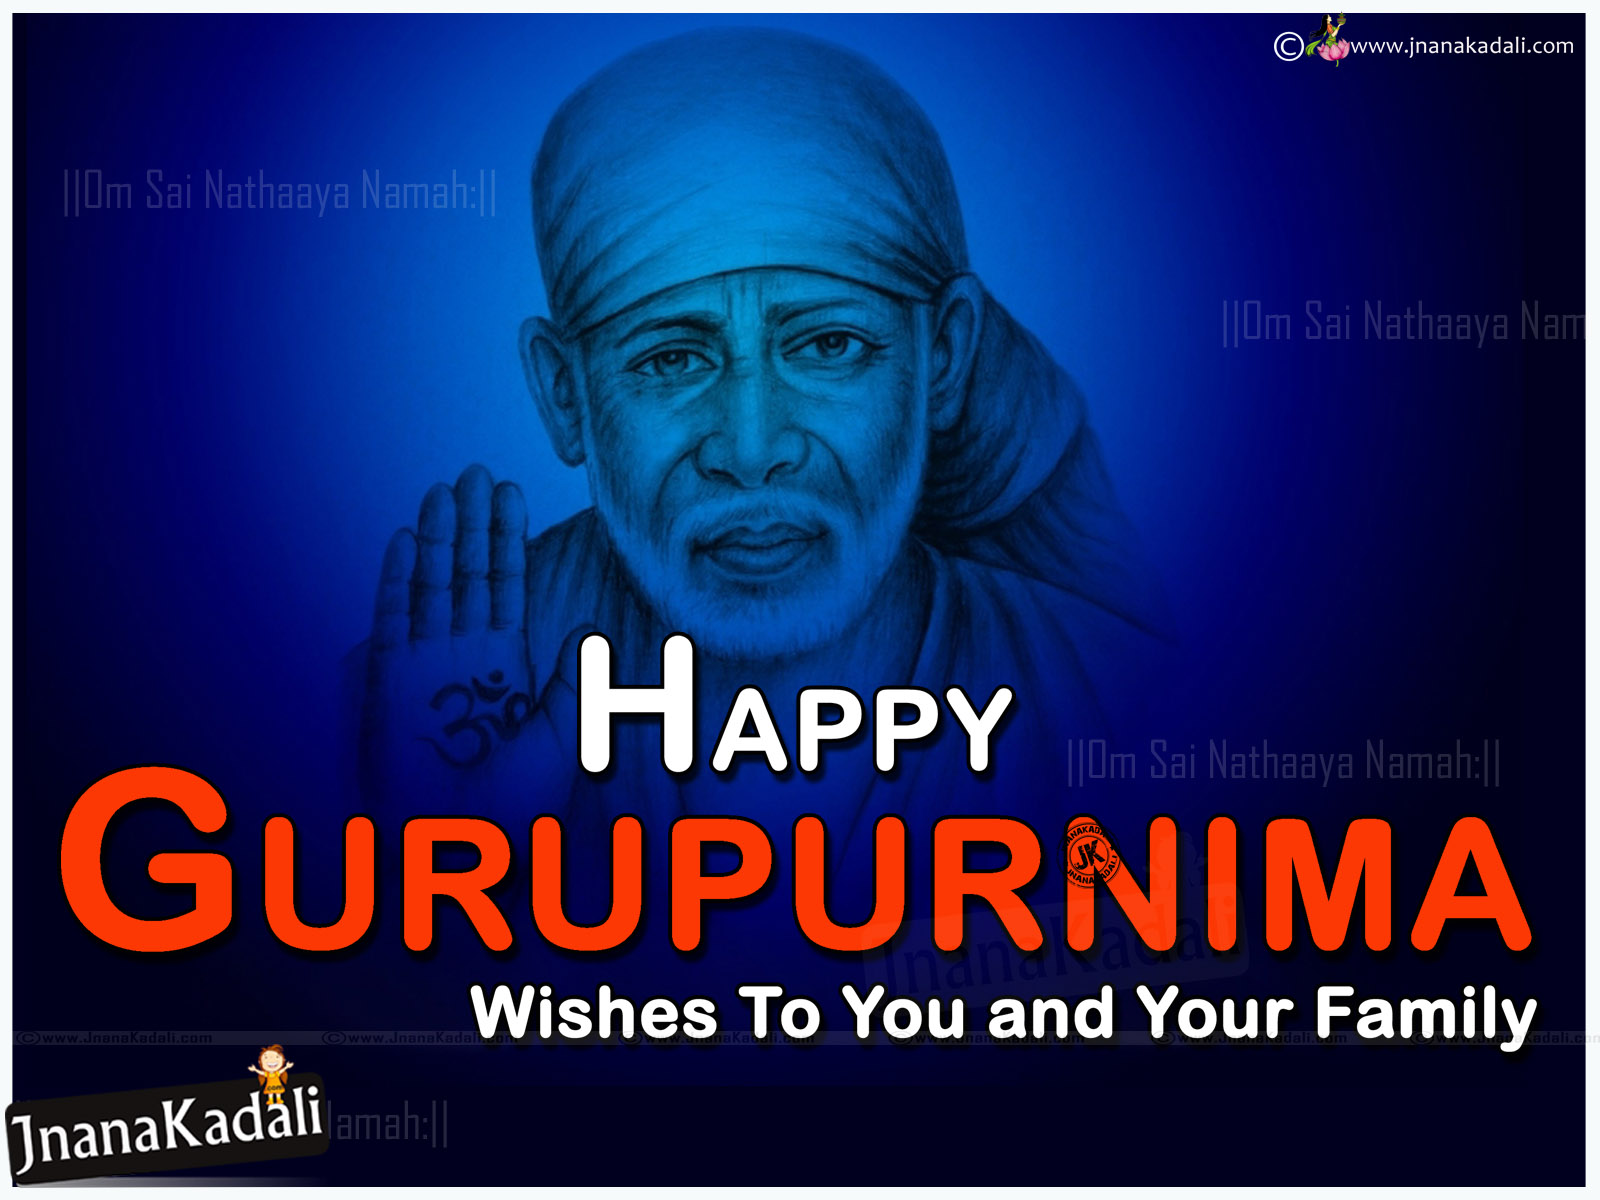 English 2016 Guru Purnima Quotations Greetings Wishes with Sai baba Hd  Images | JNANA  |Telugu Quotes|English quotes|Hindi quotes|Tamil  quotes|Dharmasandehalu|